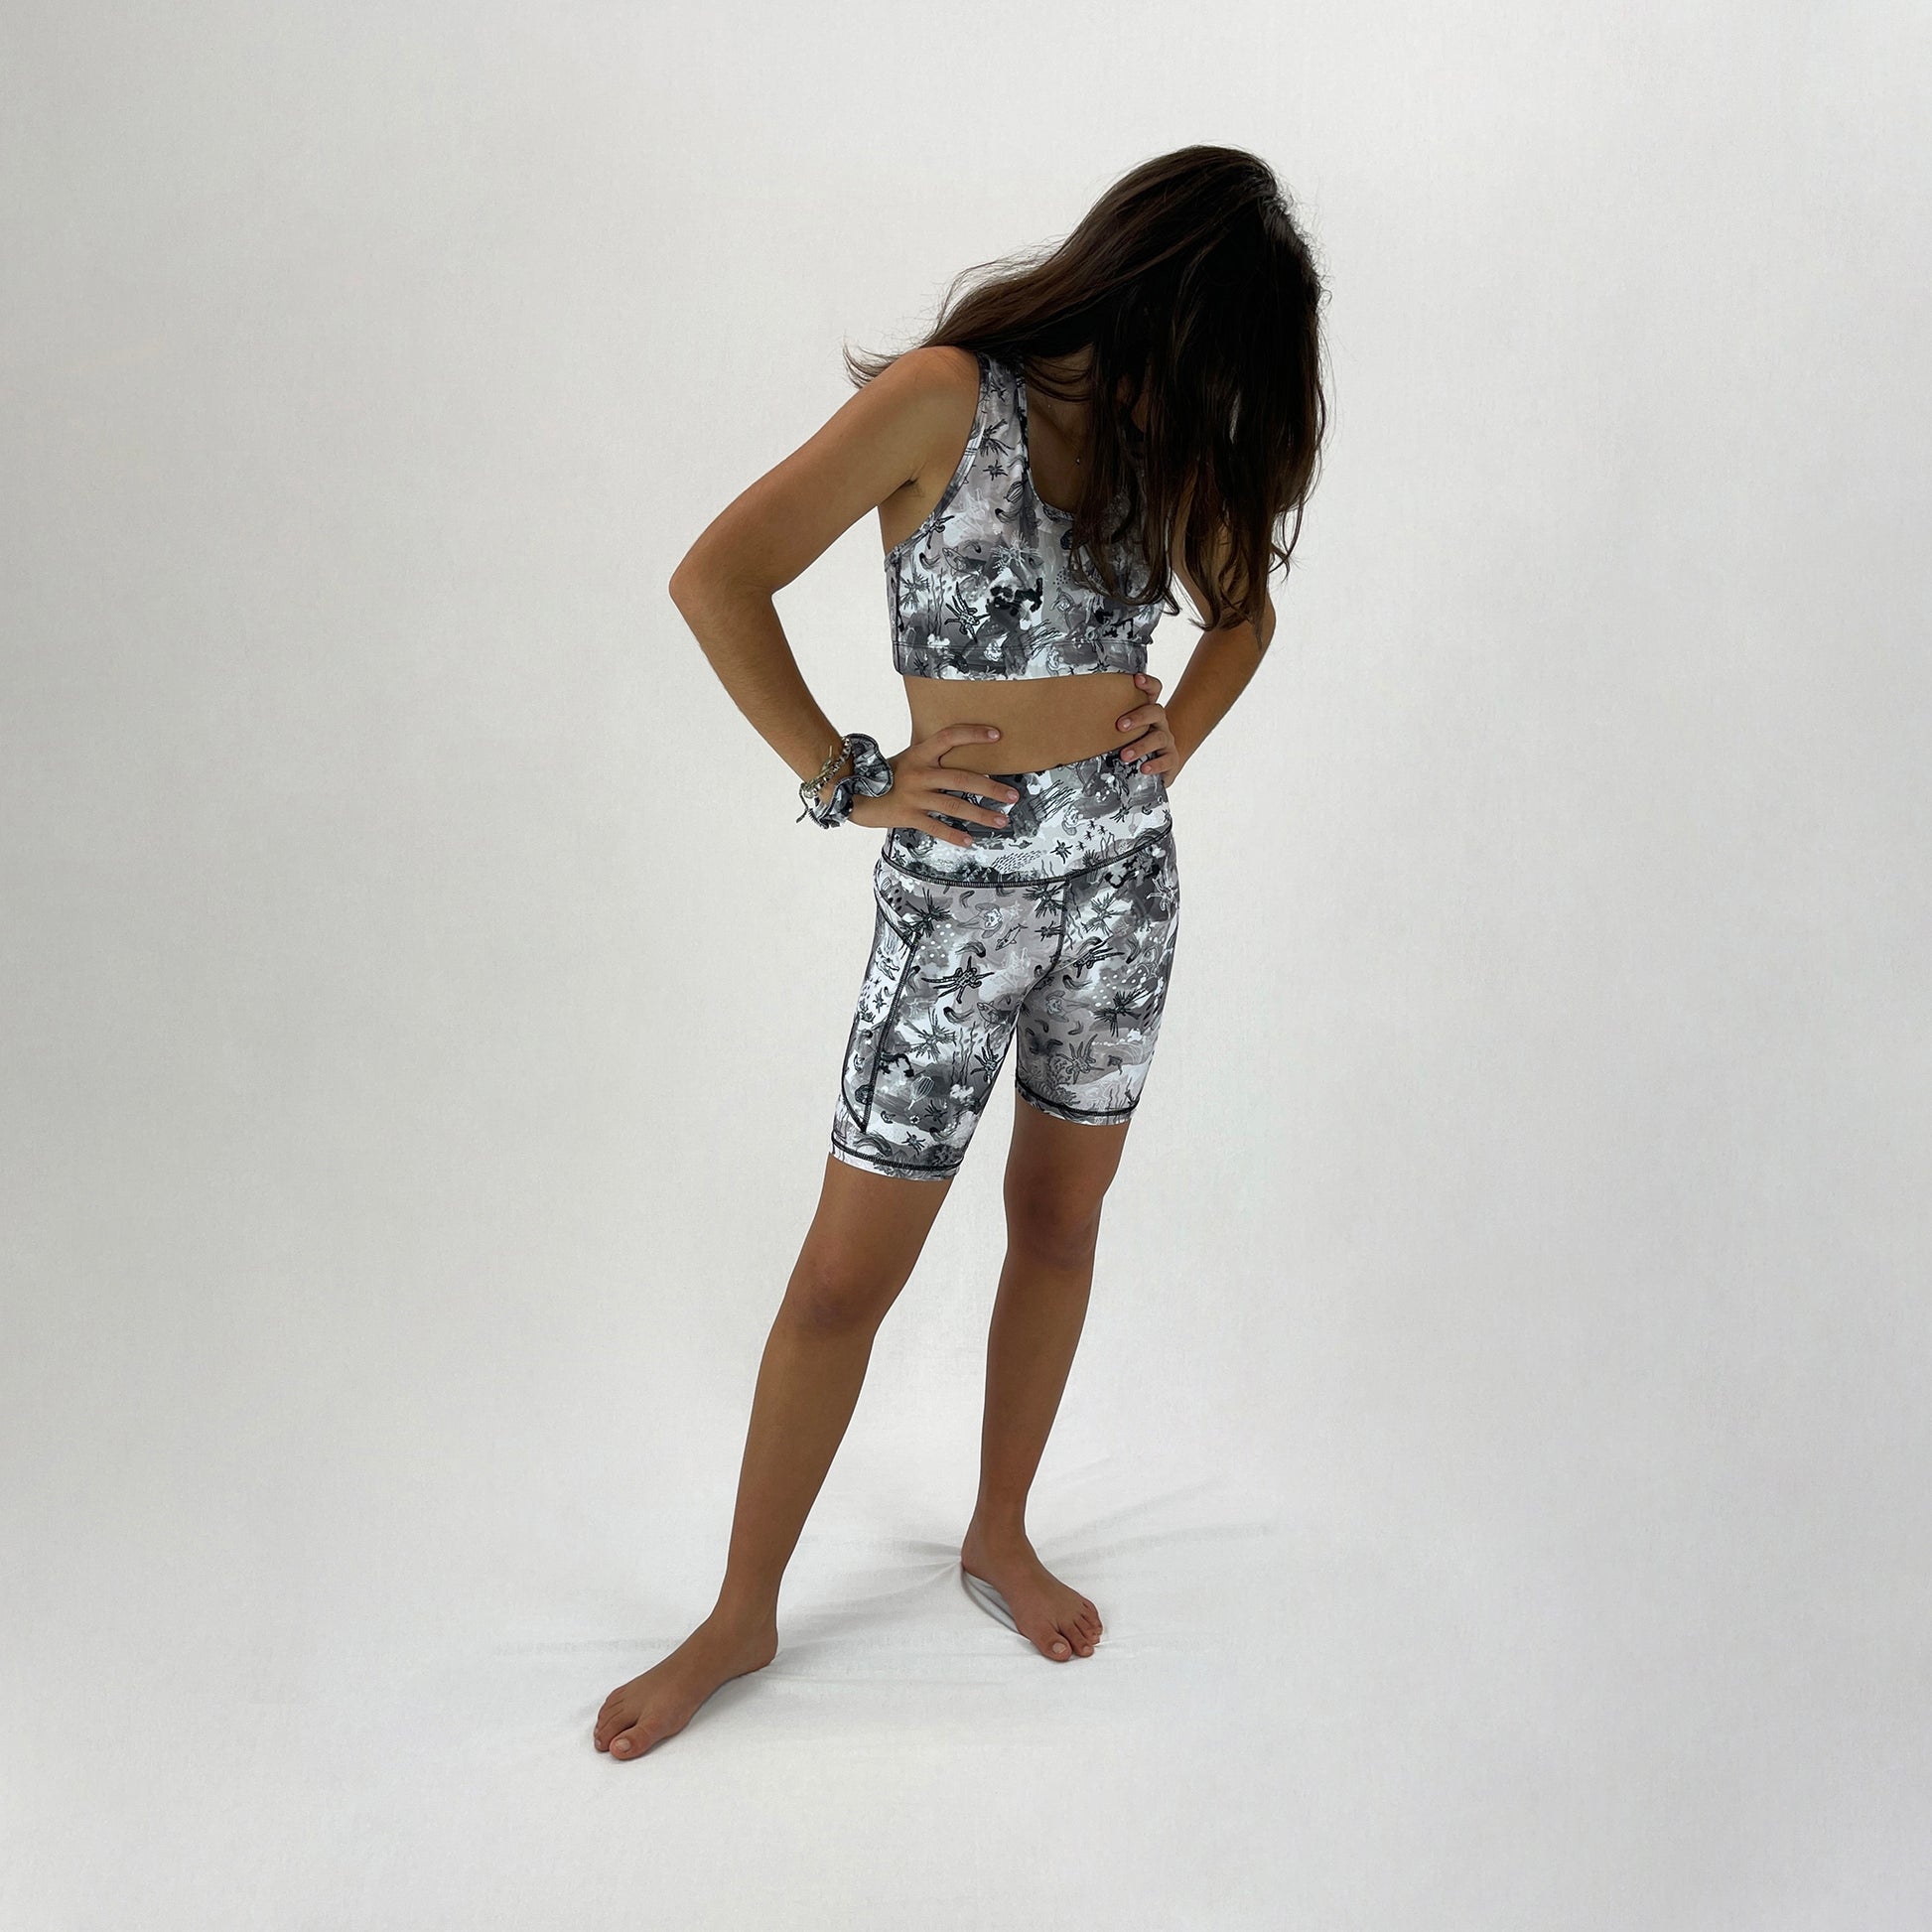 trendy bike shorts in recycled fabric made in australia - Killer - full body